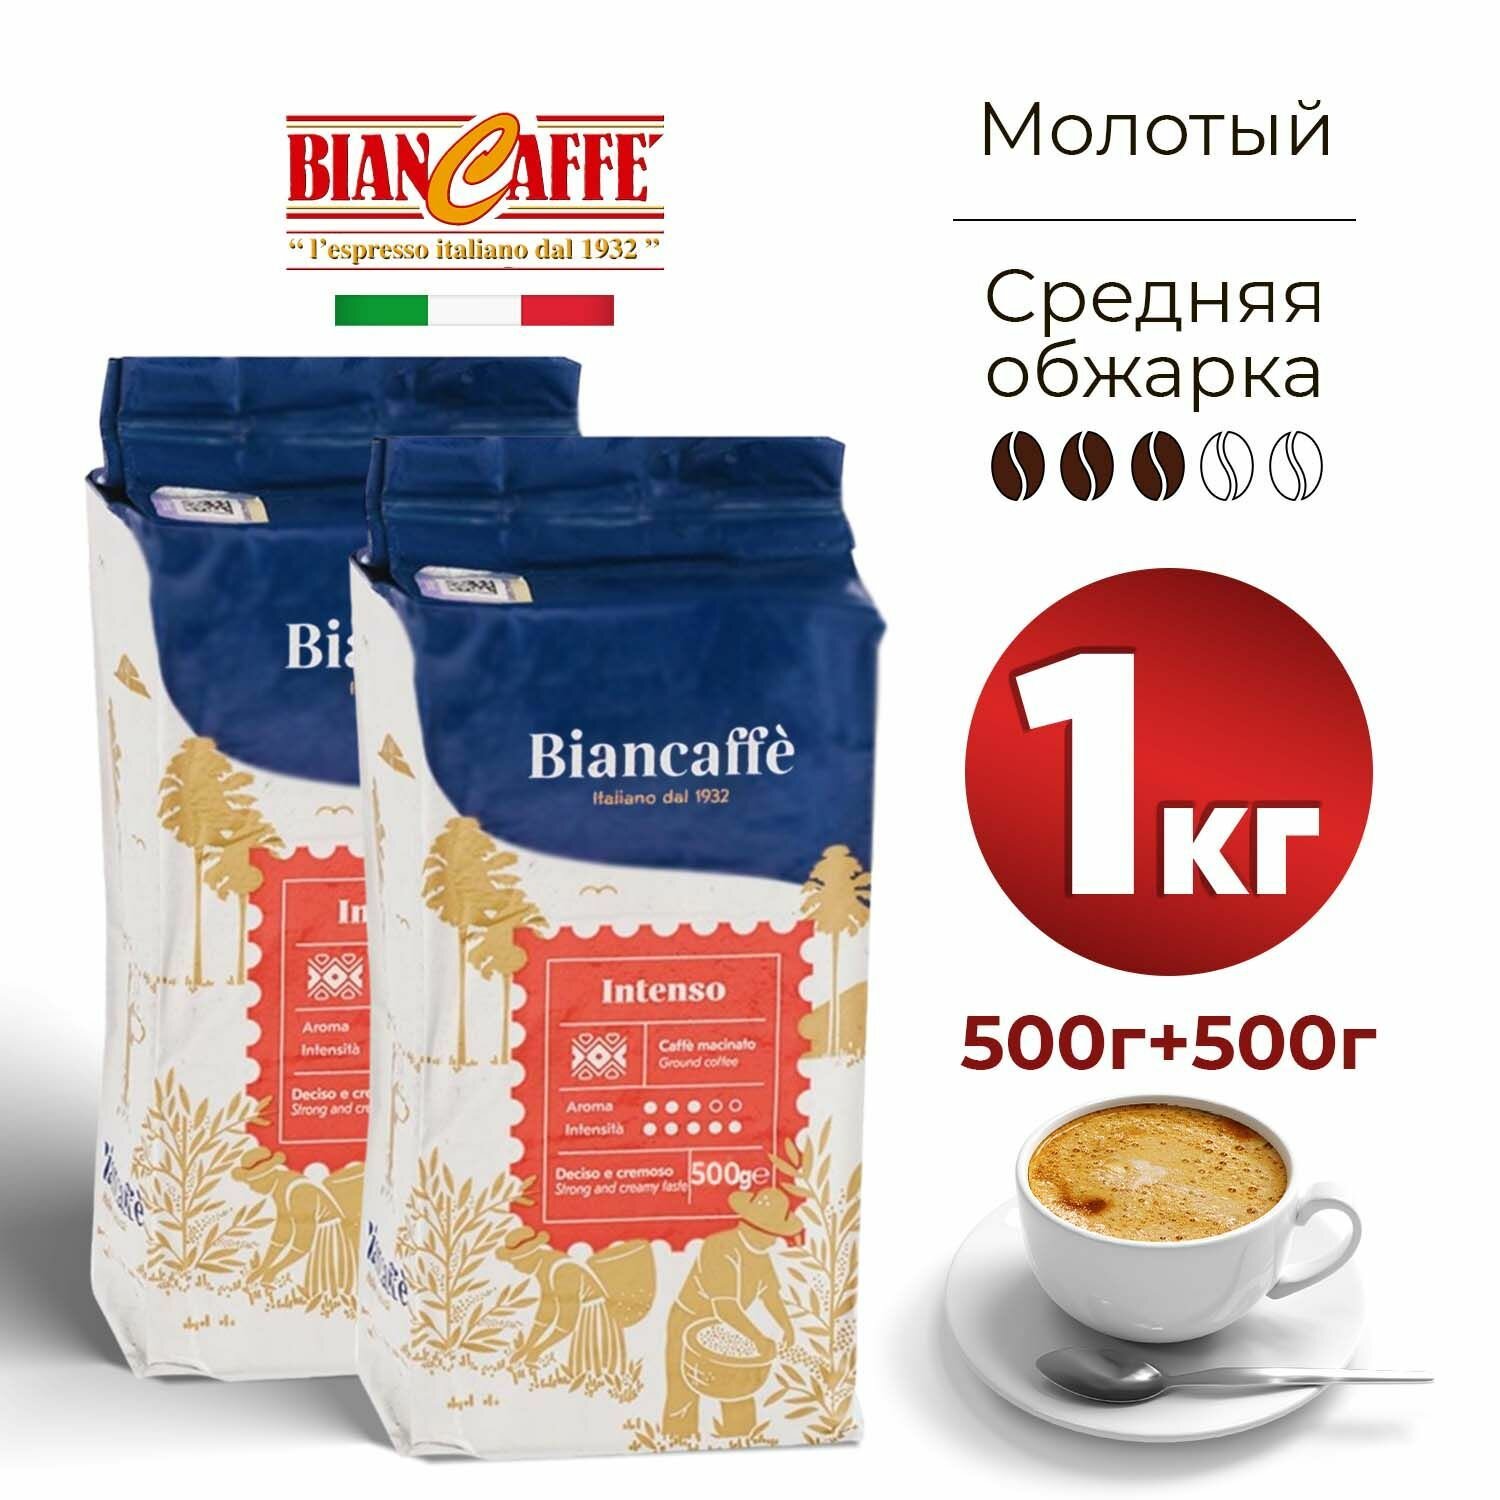 BIANCAFFE Кофе молотый INTENSO 1 к г (500г+500г)